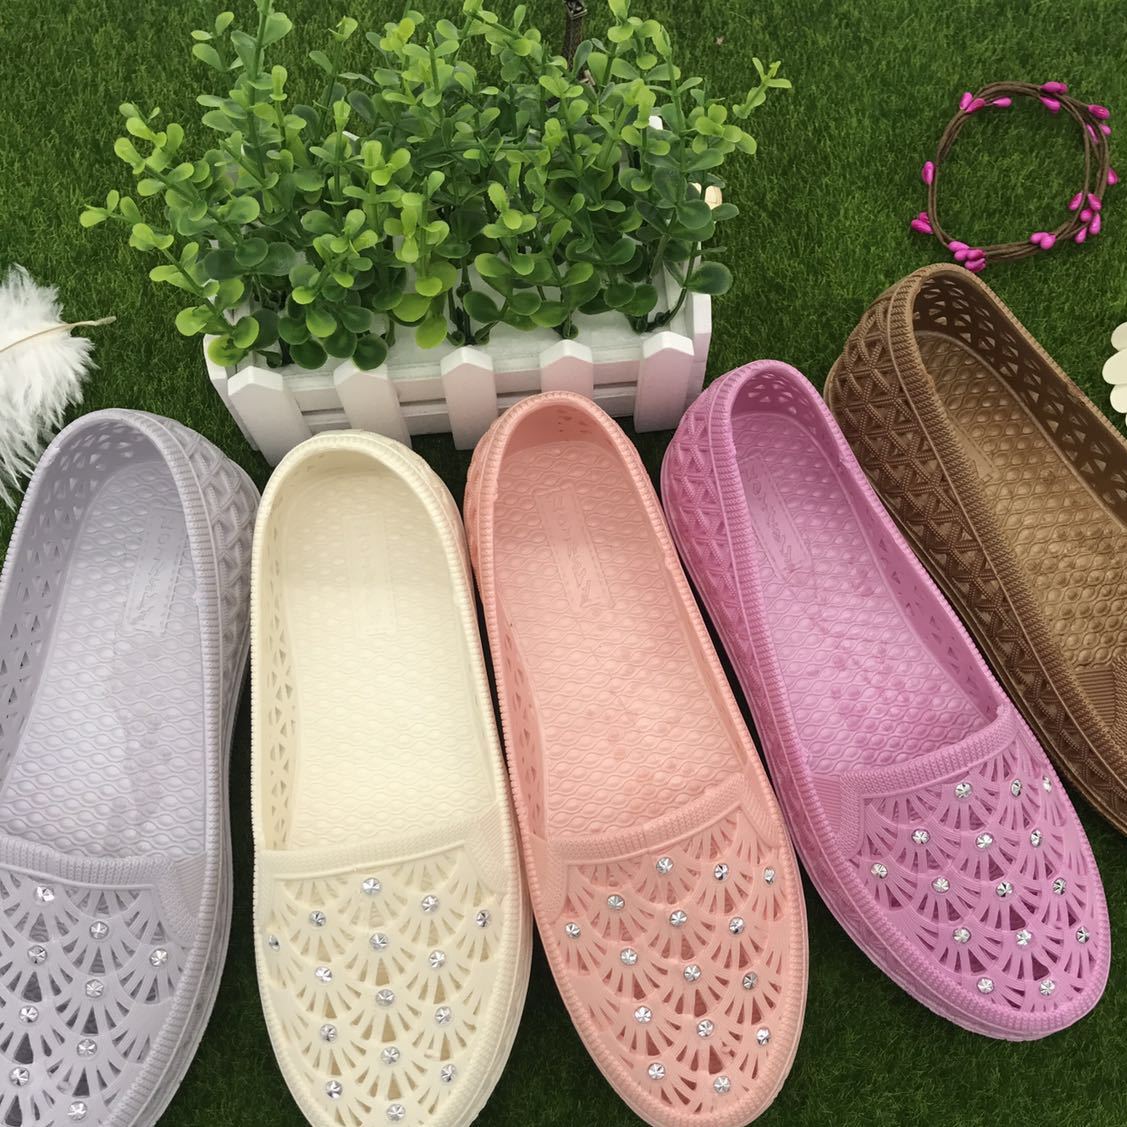 Hot 2019 new women's sandals mother's shoes colorful women's sandals crocs price discount